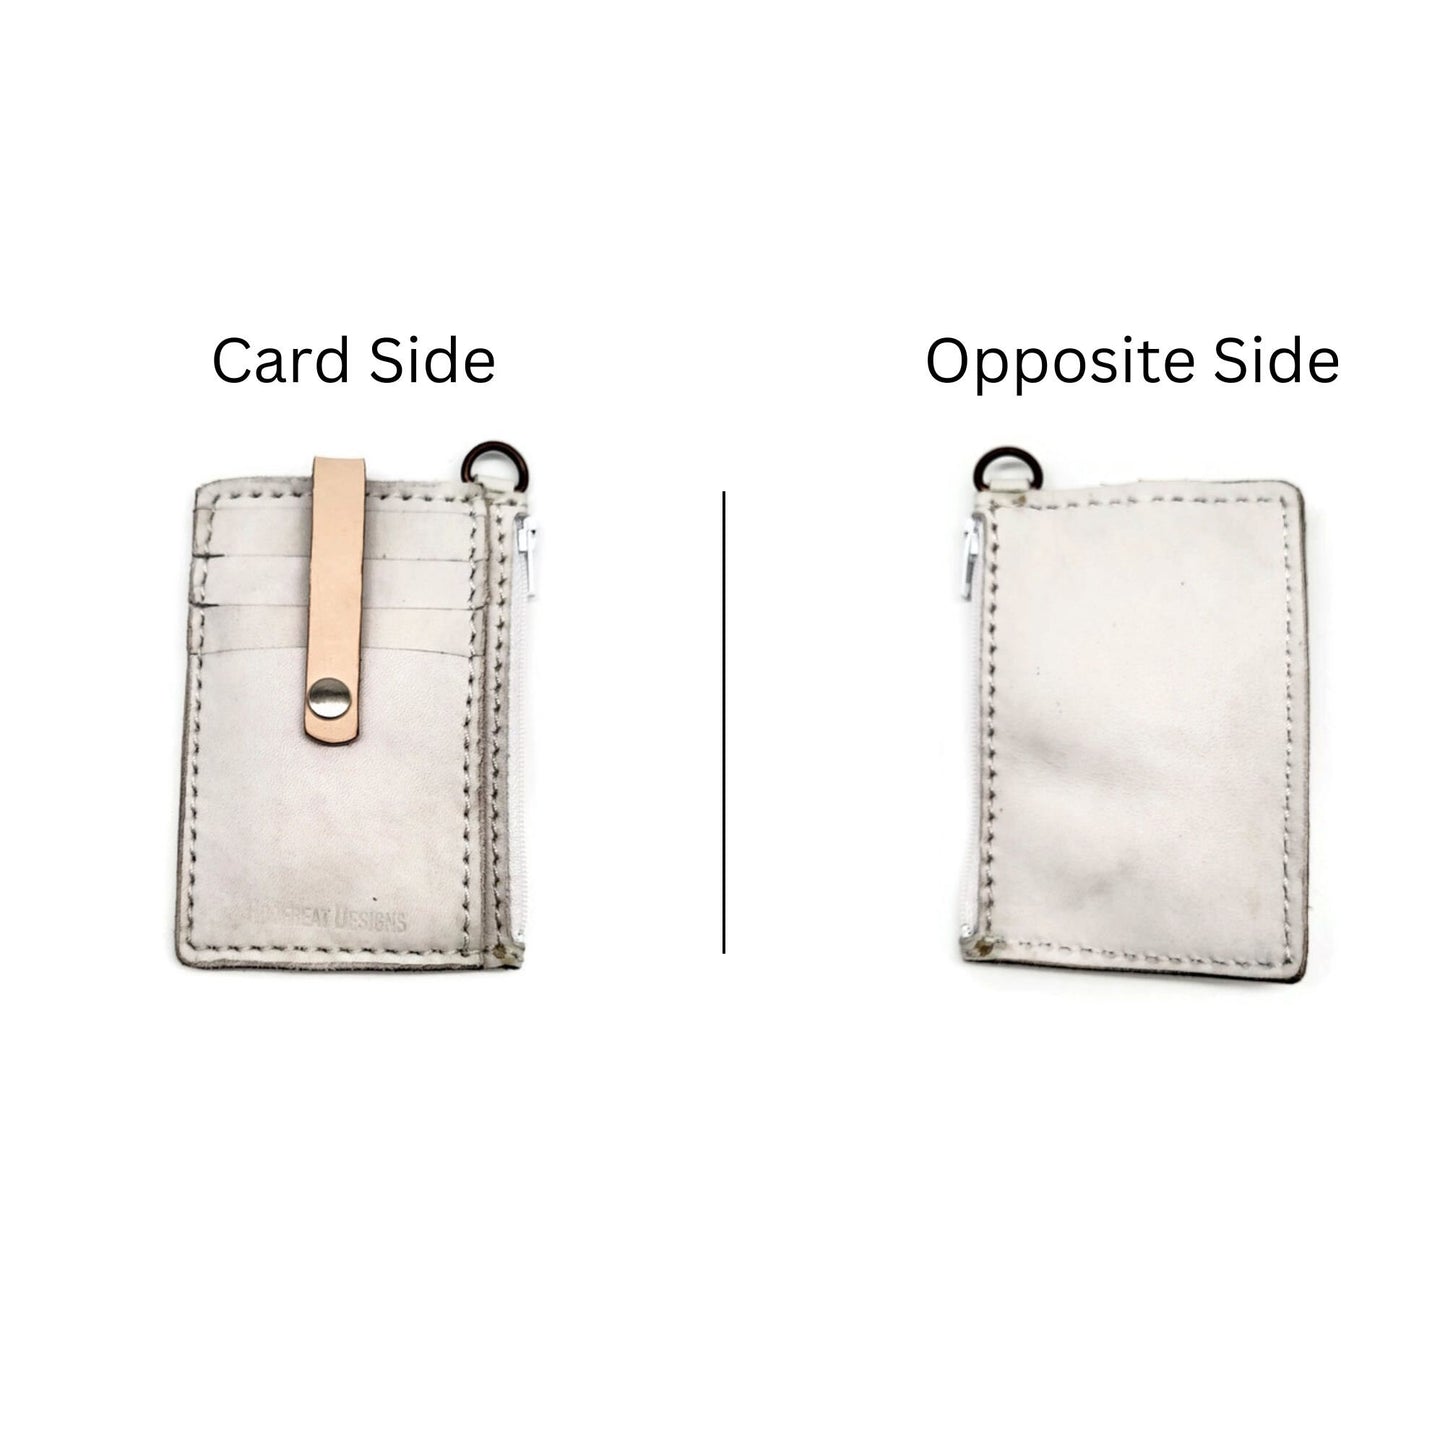 Leather Card Zipper Wallet